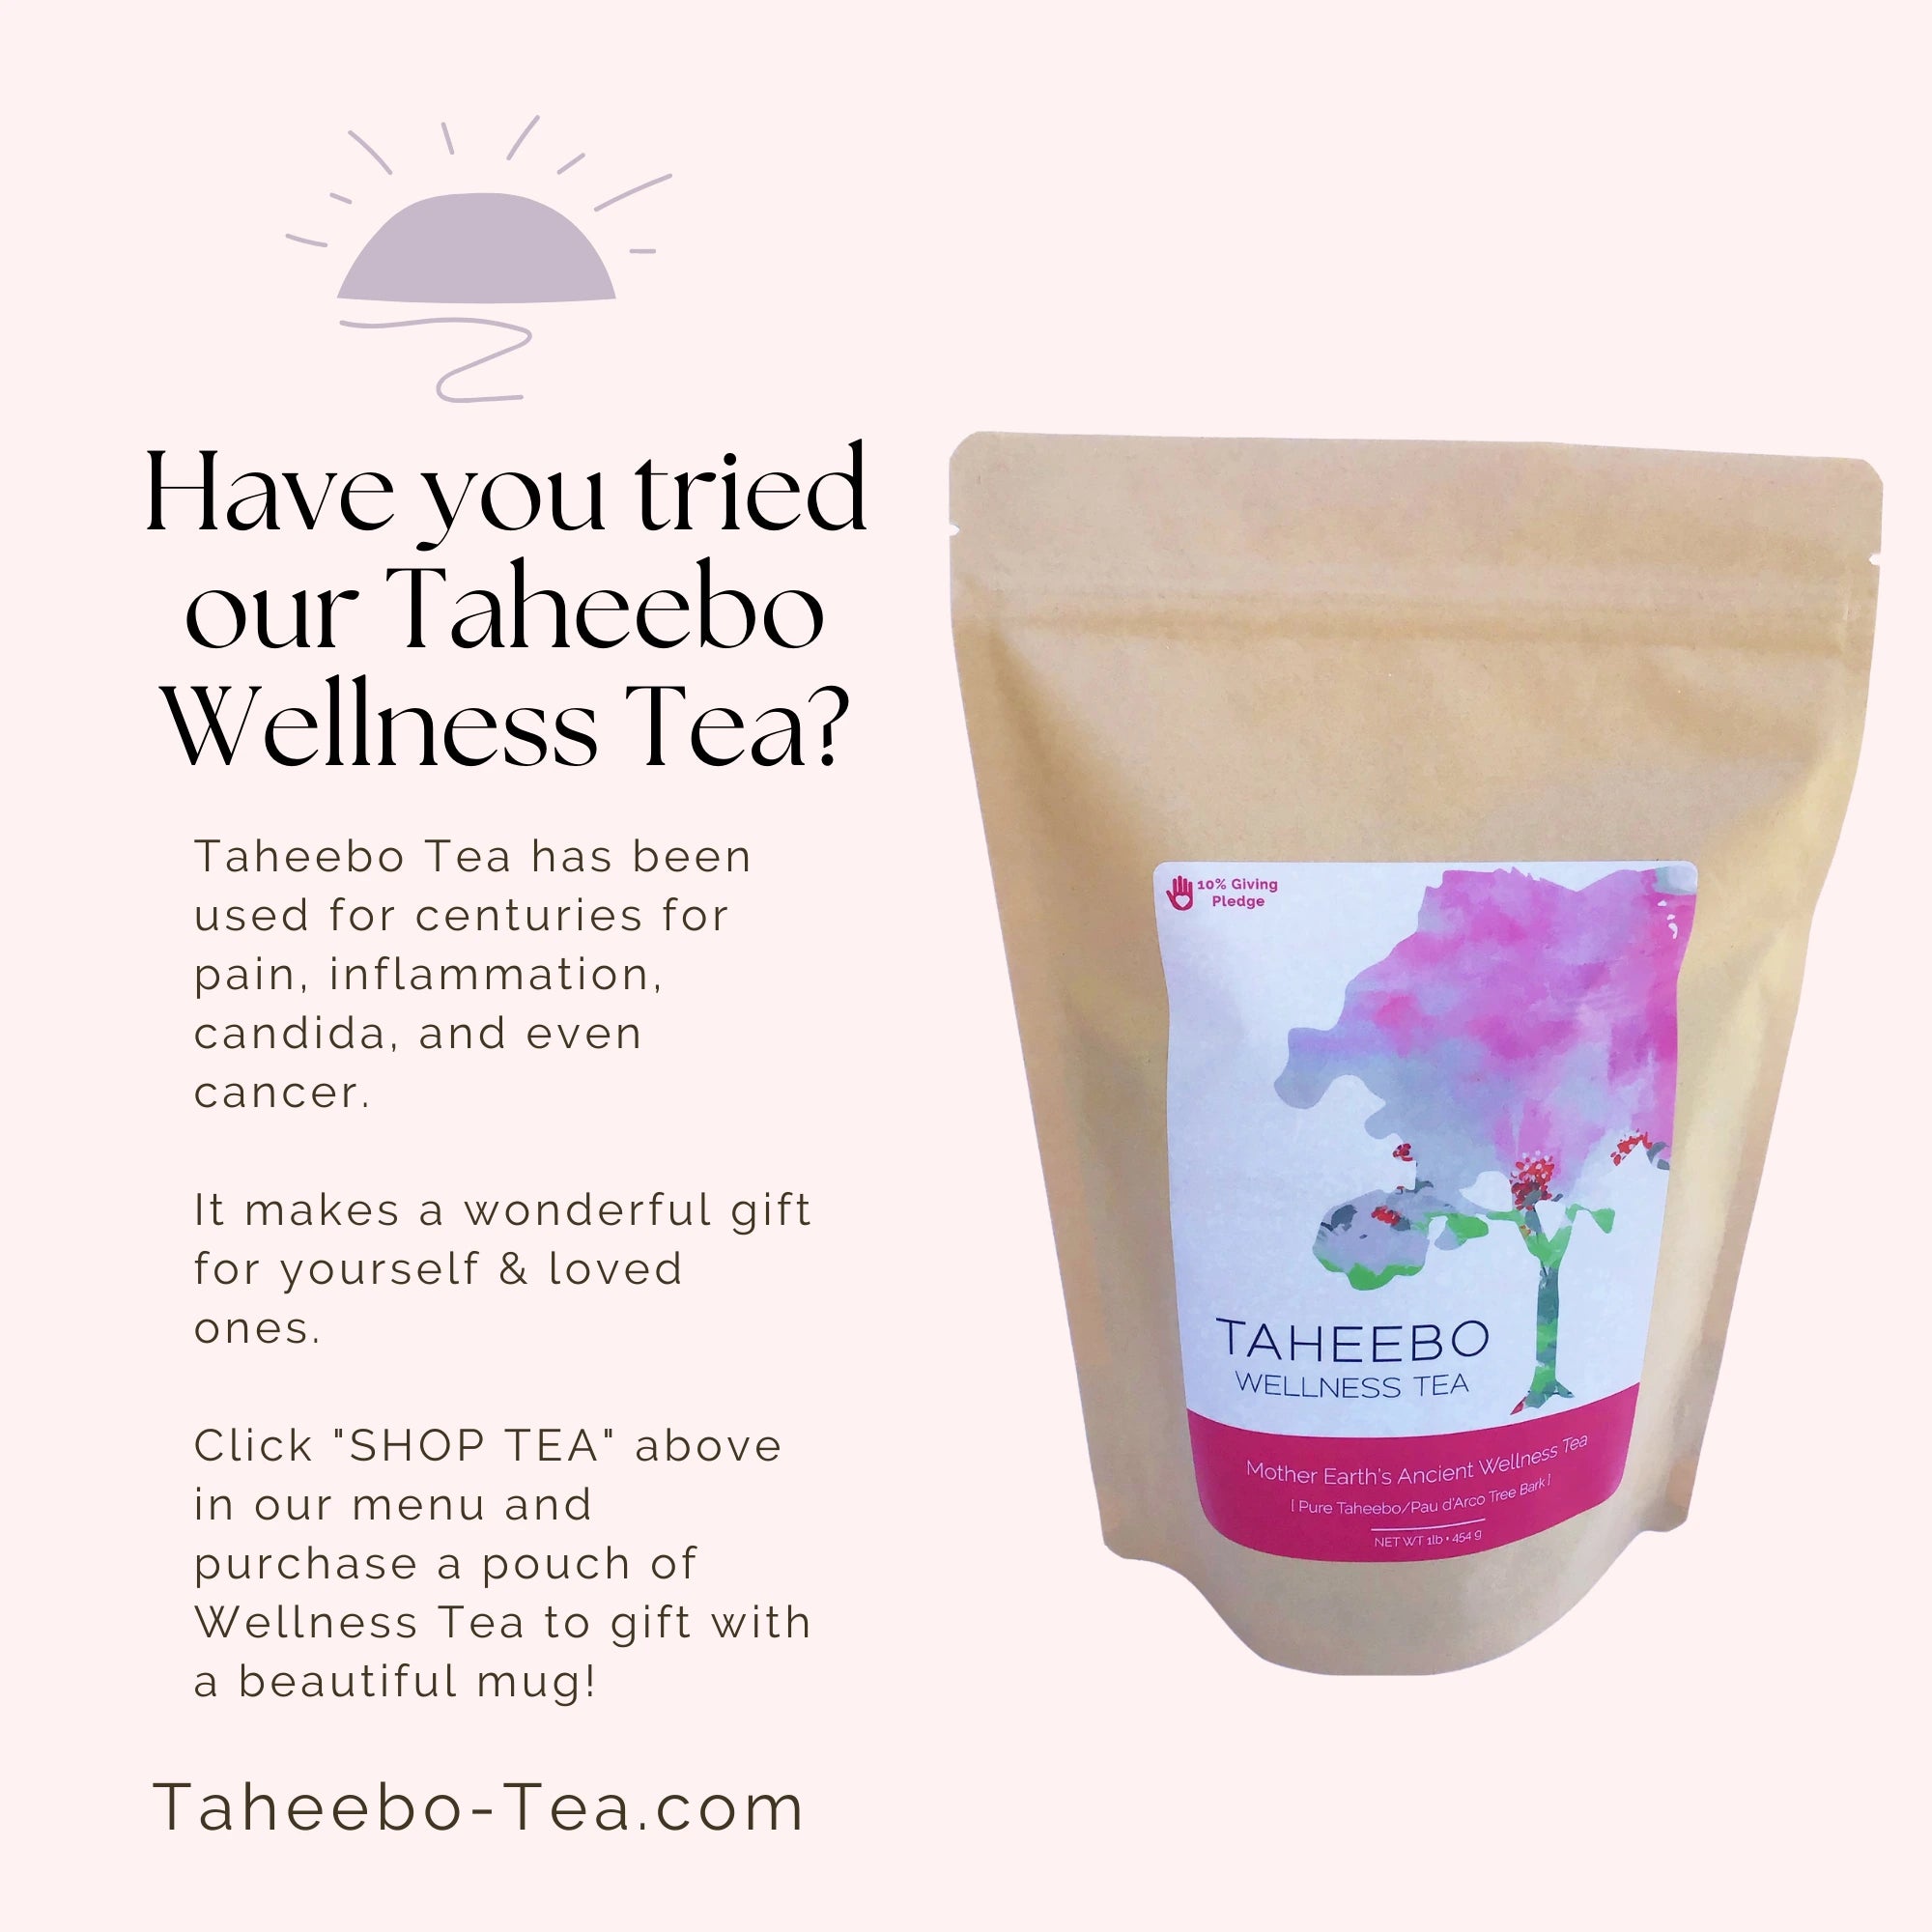 Have you tried Taheebo Wellness Tea yet?